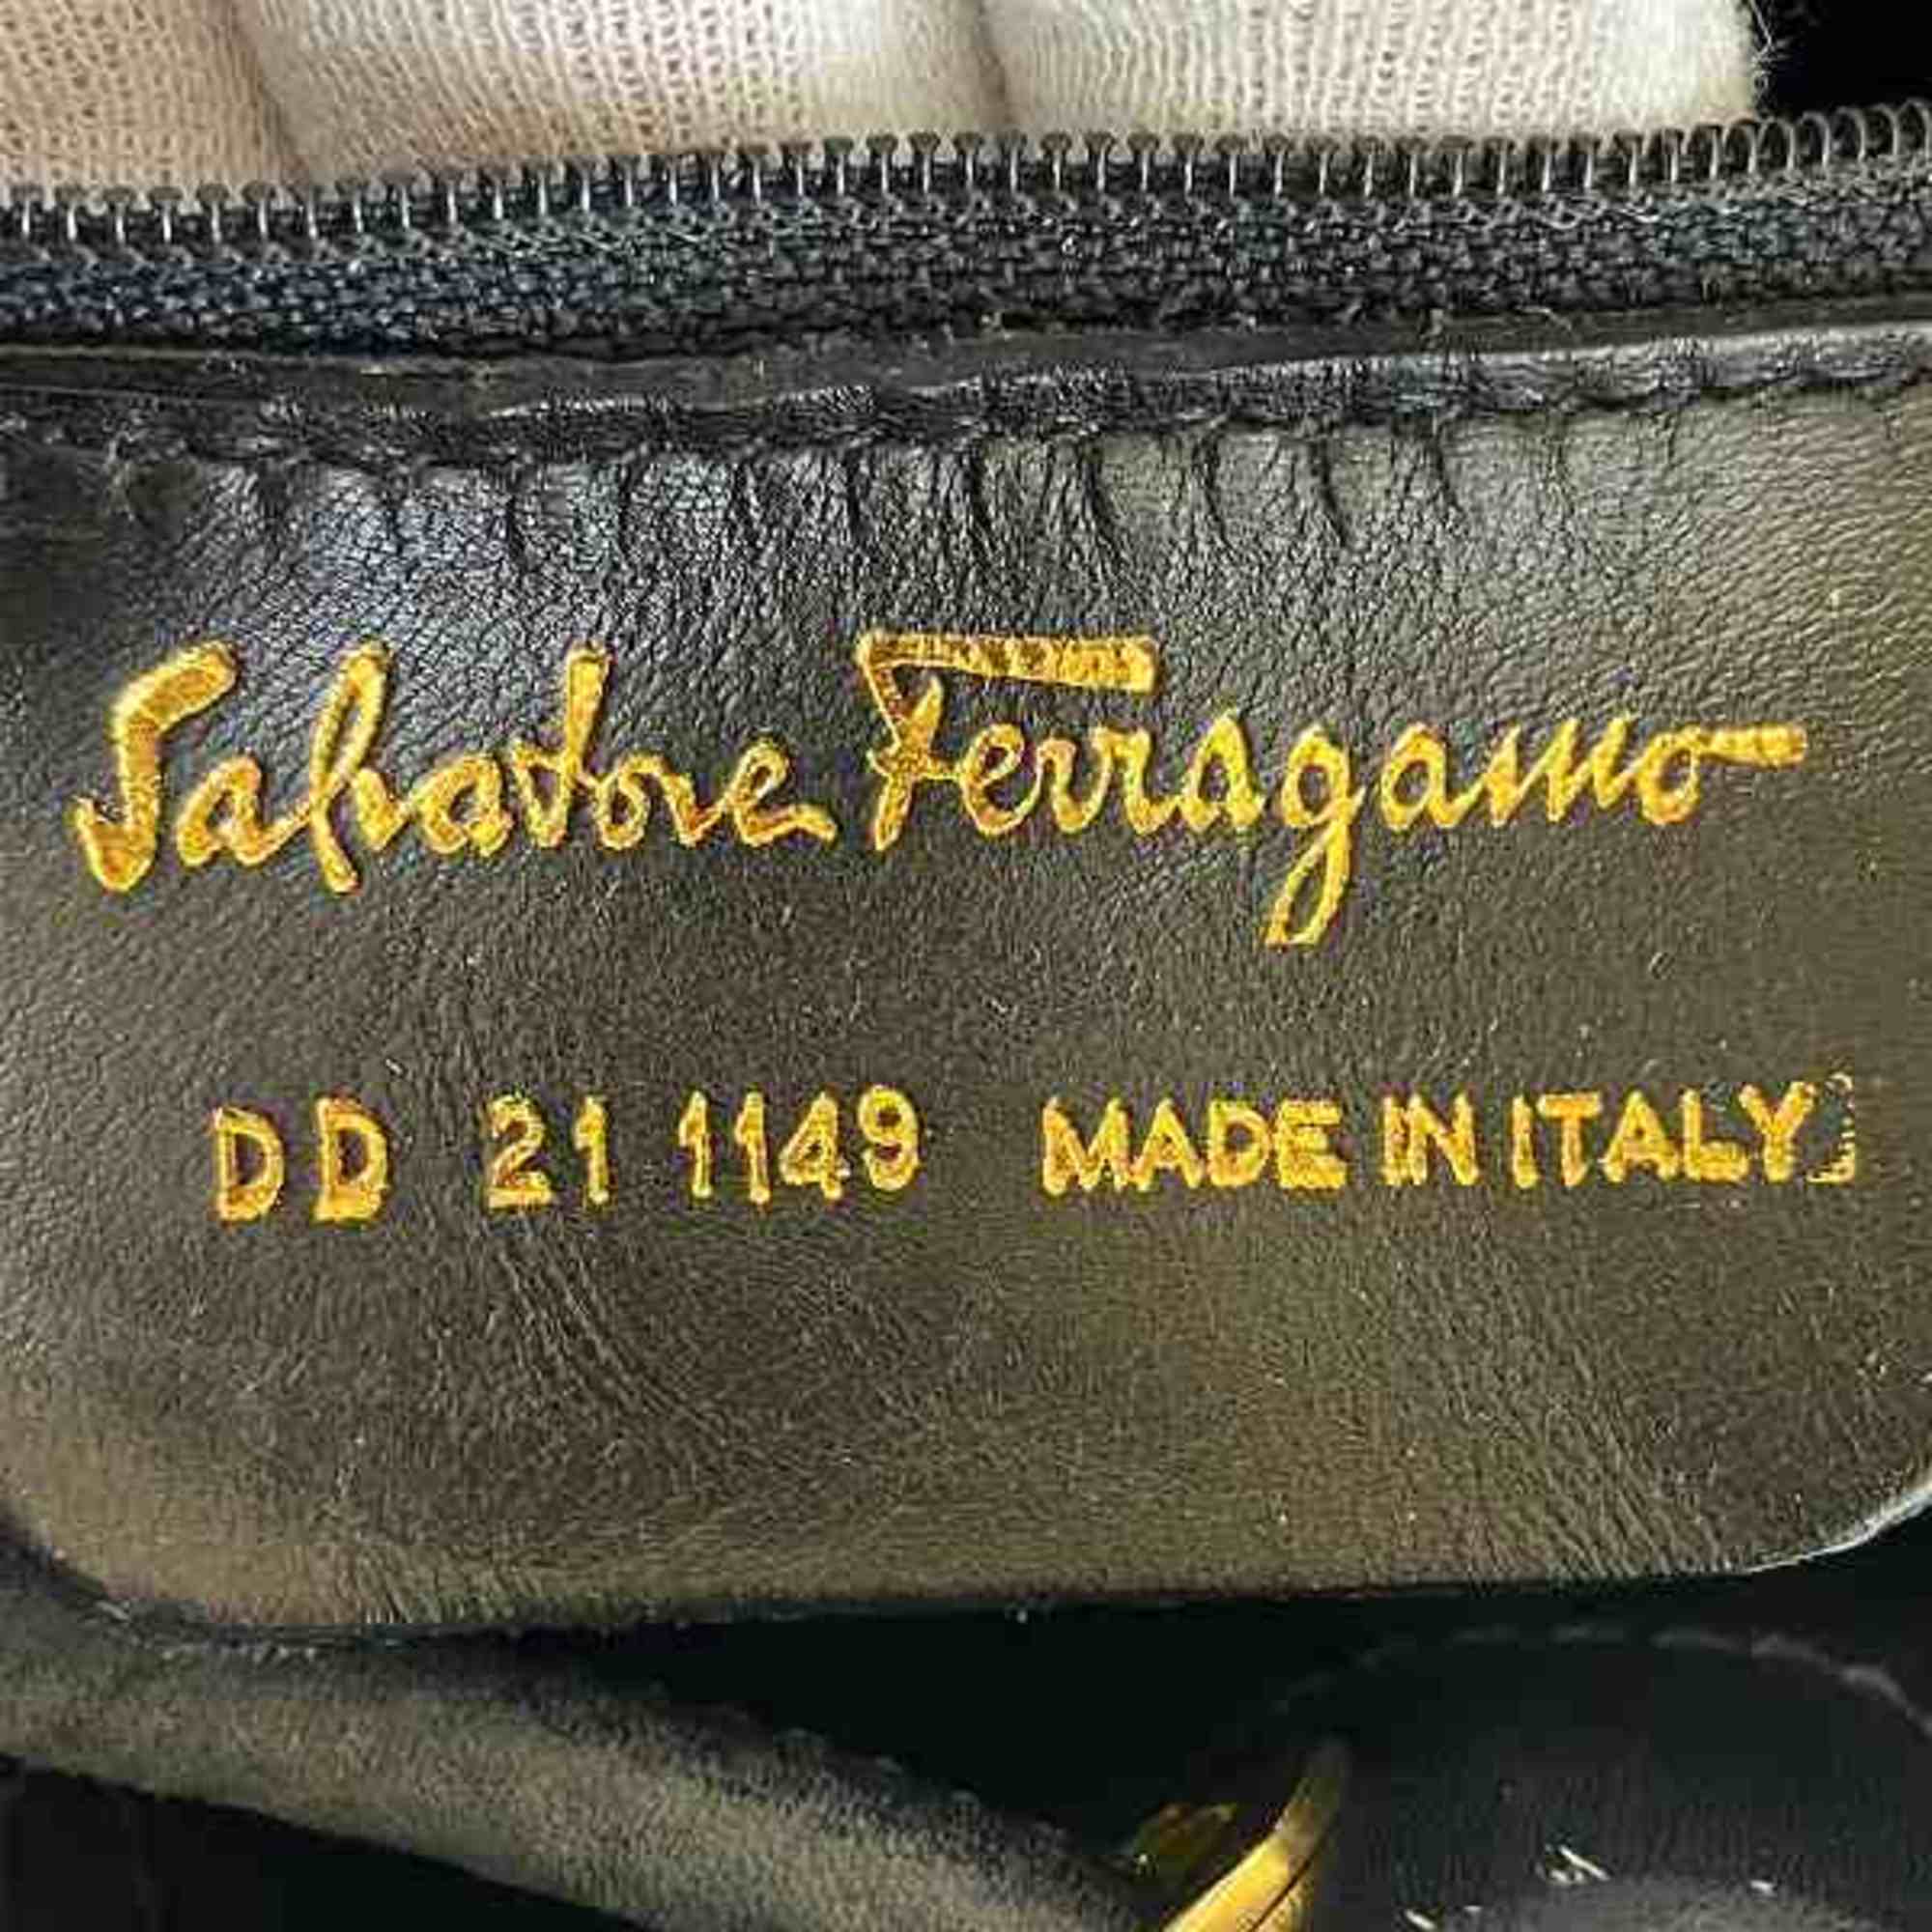 Salvatore Ferragamo Ferragamo AN21.5213 Navy Leather Bag Shoulder for Women